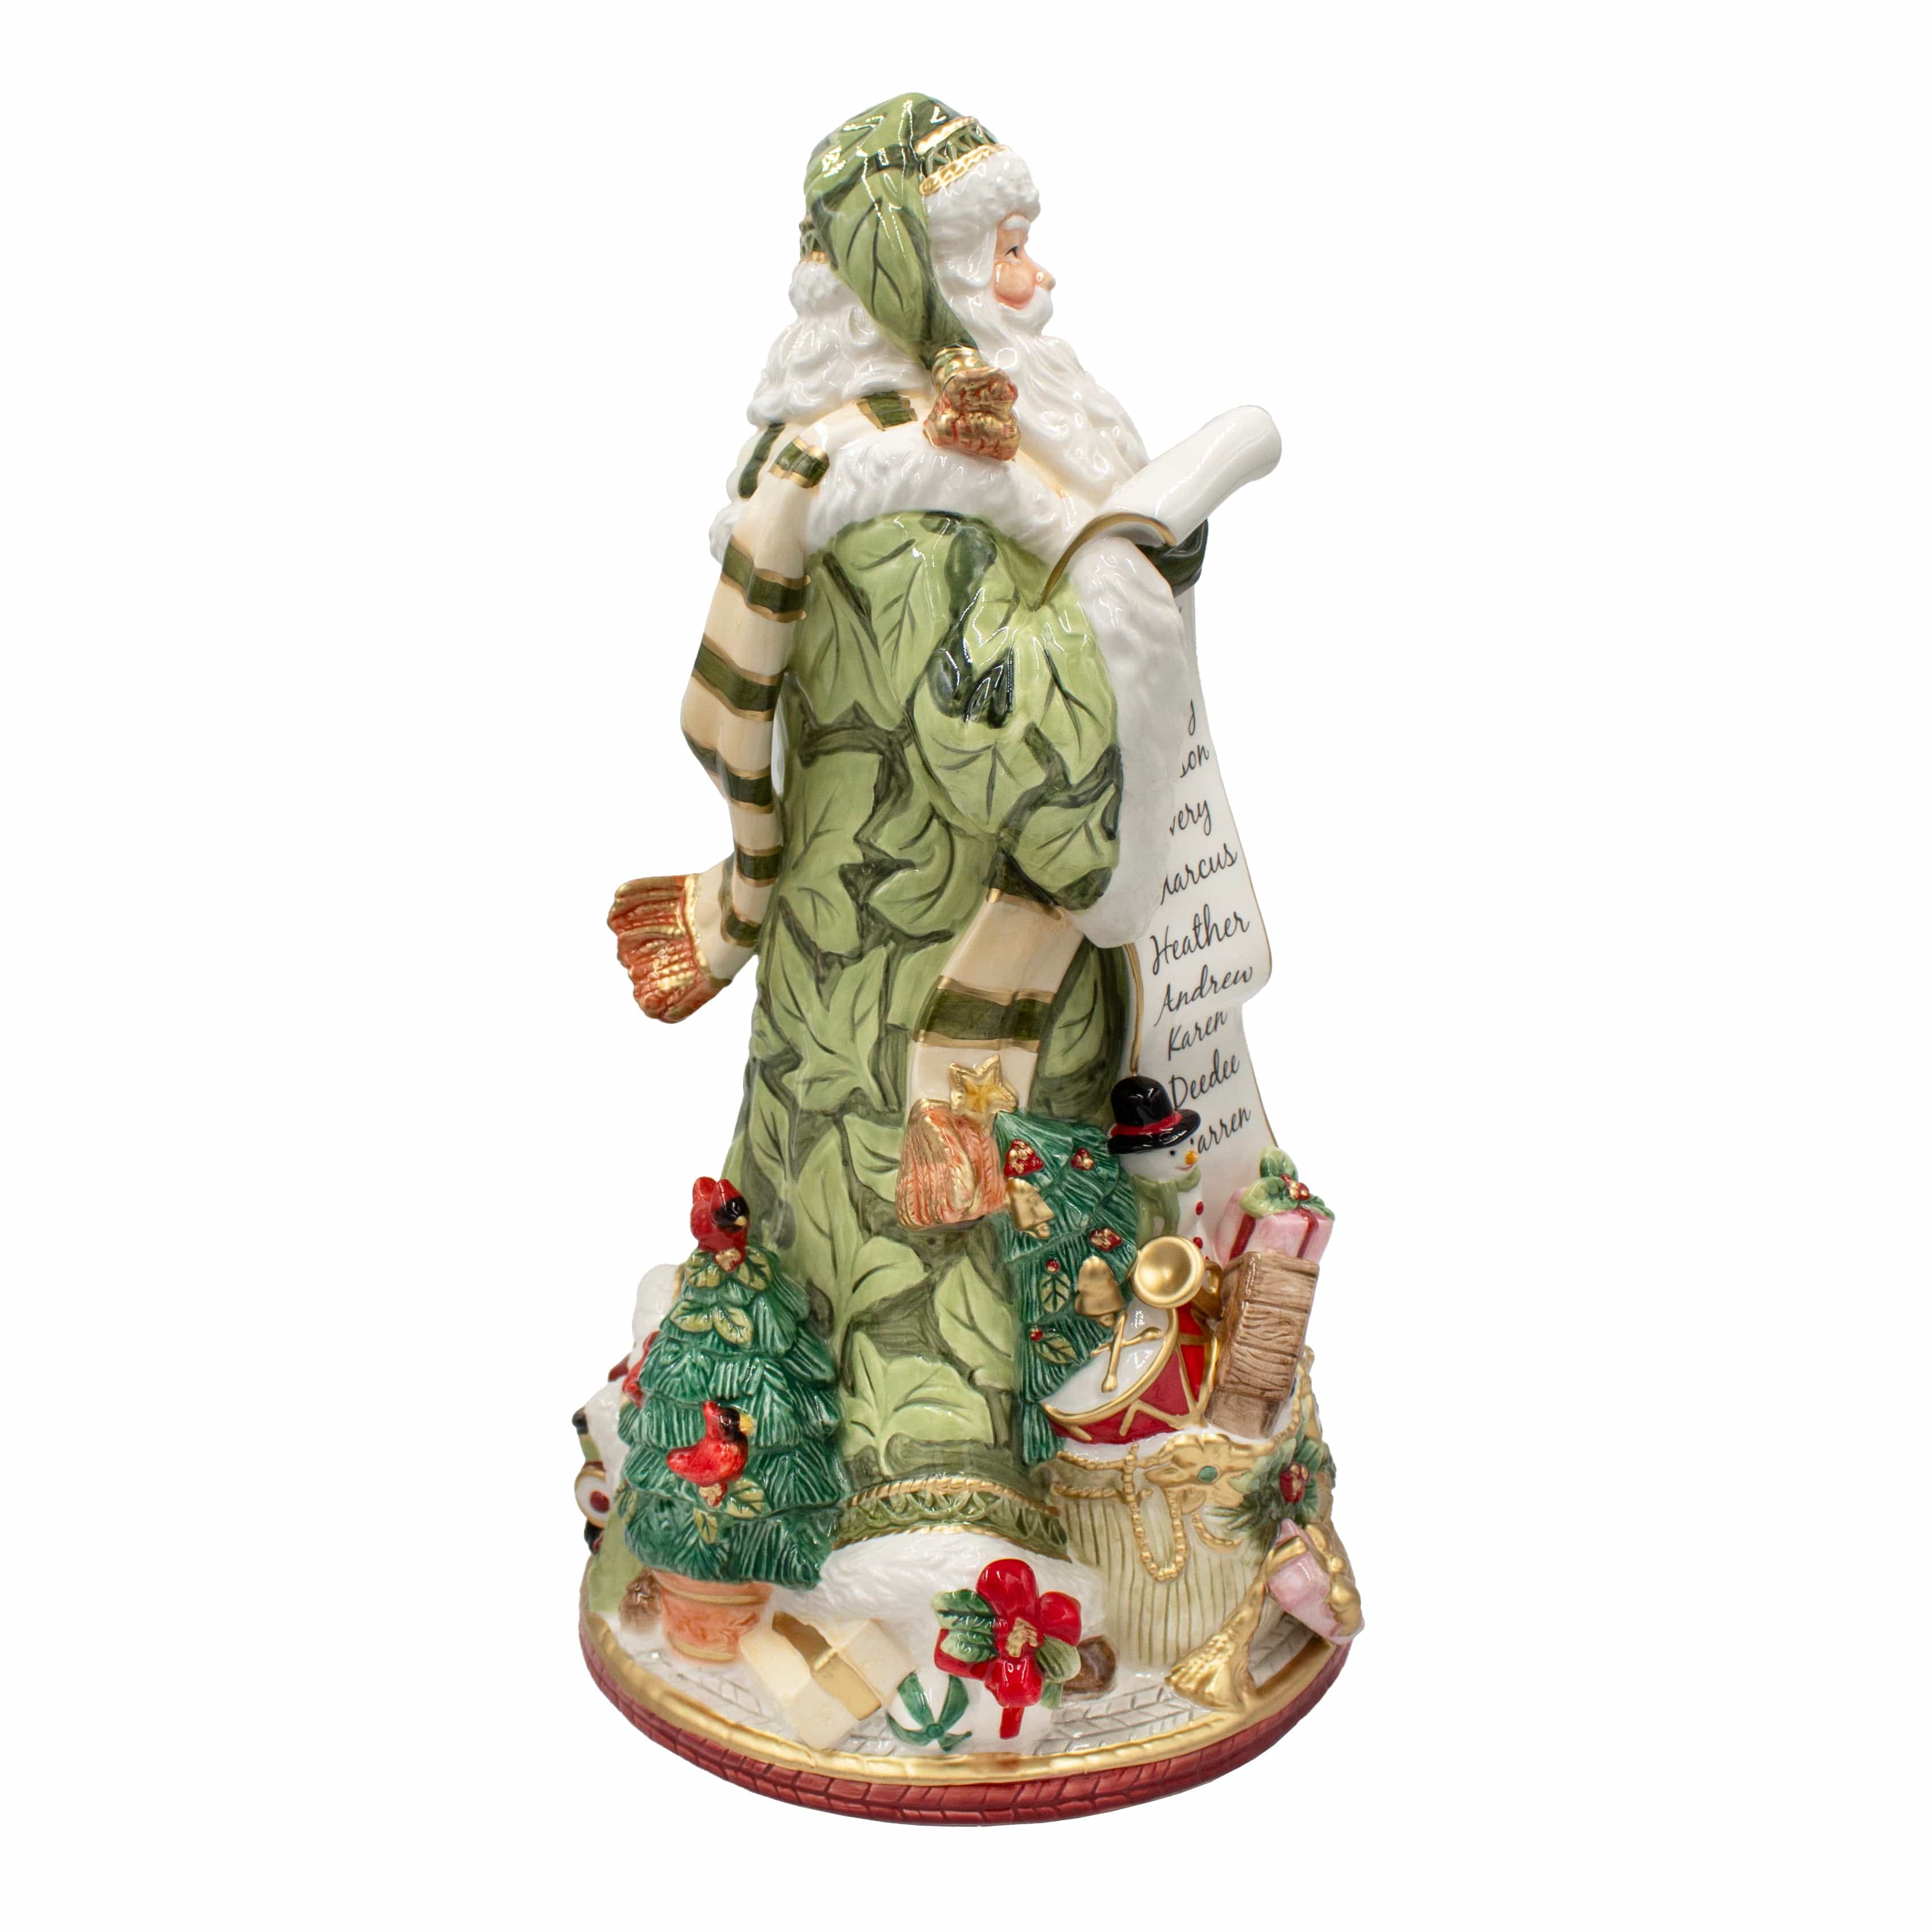 Holiday Home Green Santa Figurine, 18.75 IN